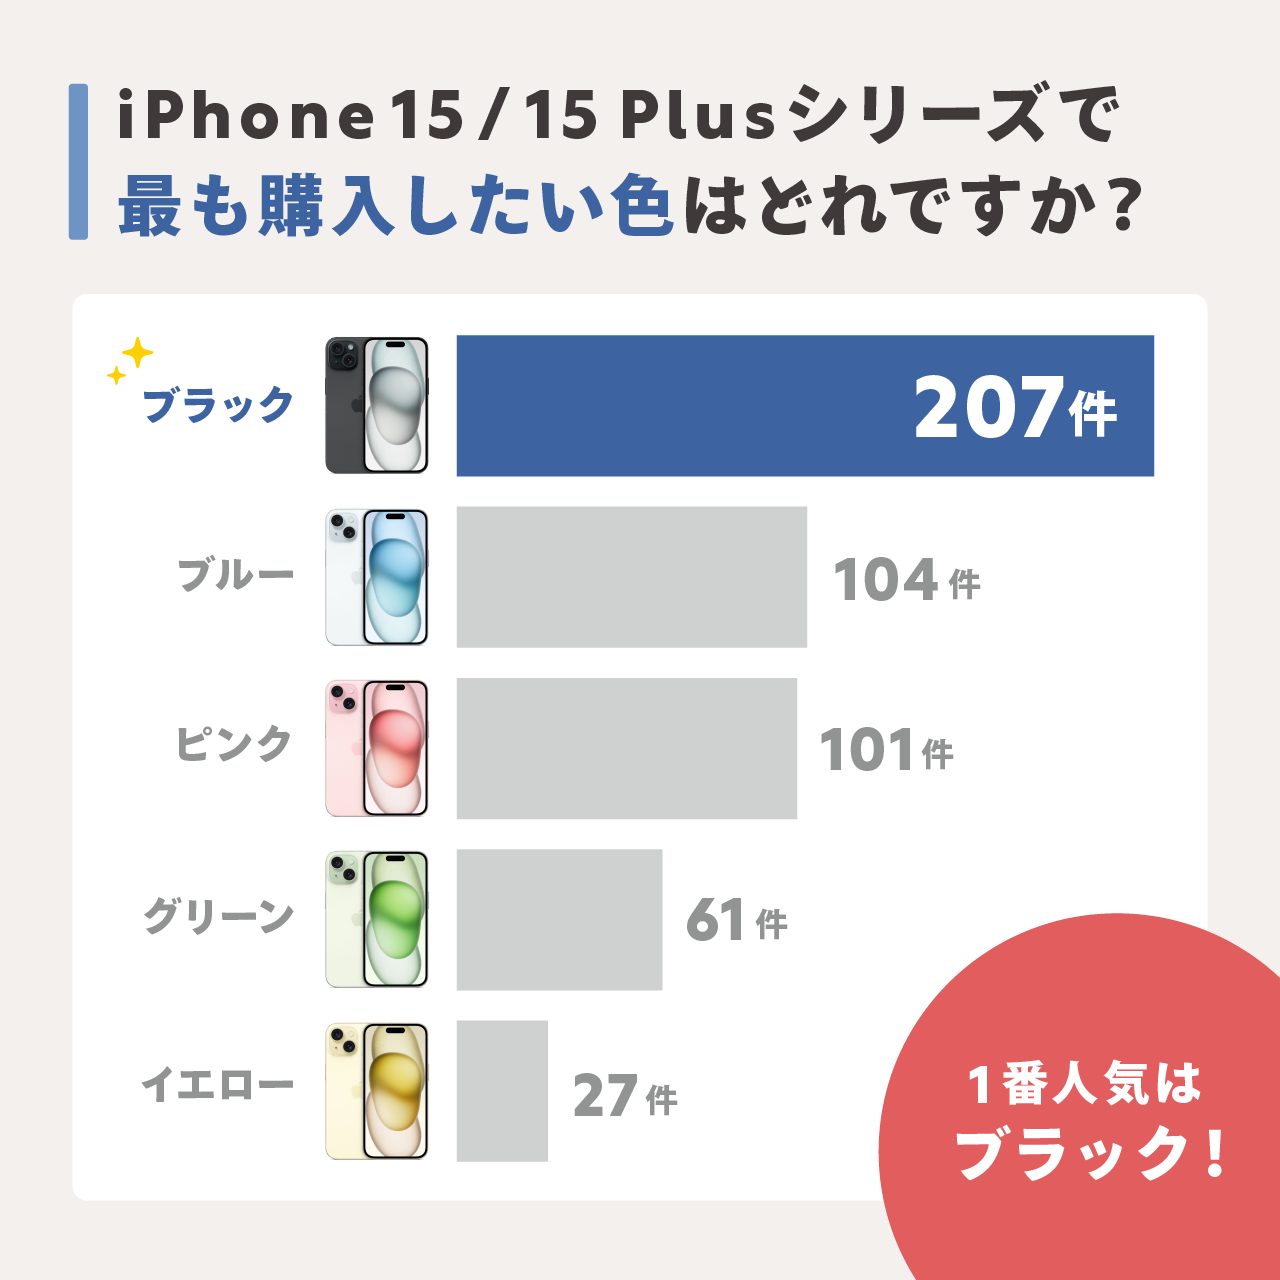 iPhone 15シリーズで最も人気な機種は「iPhone 15」